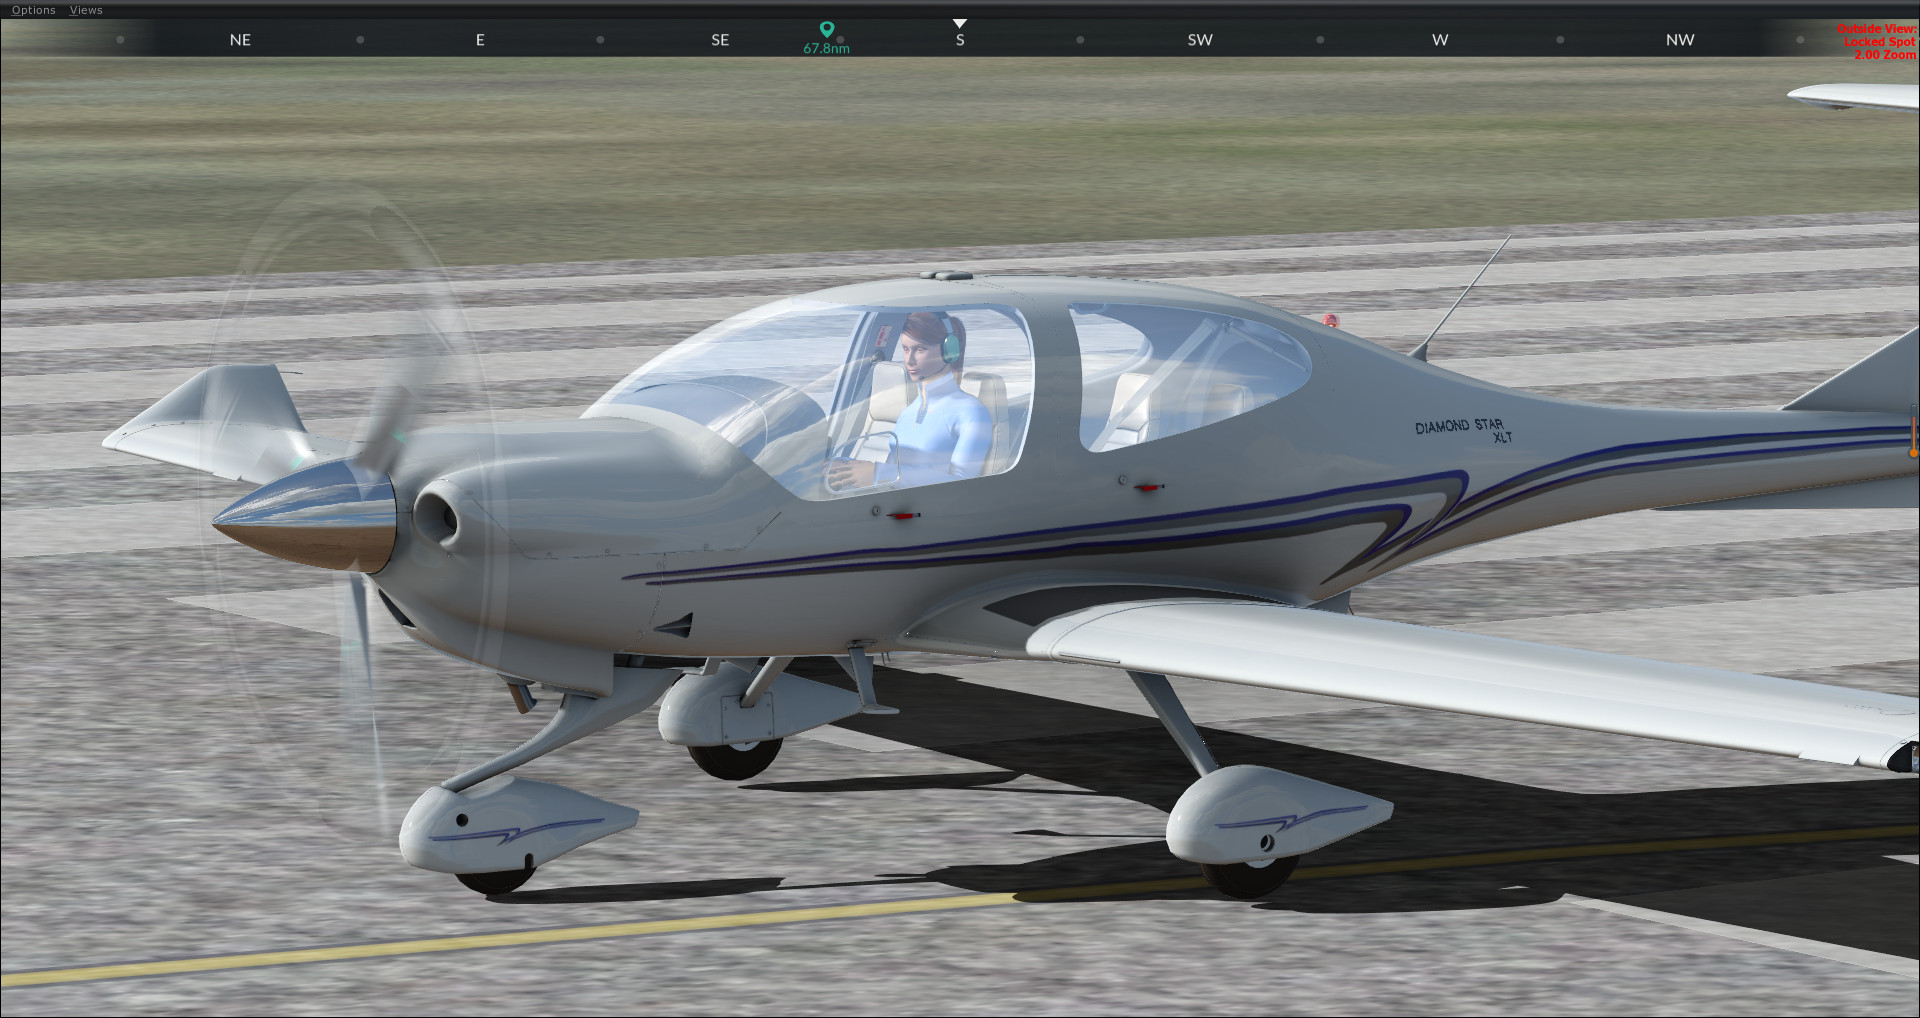 Flight Sim World默认七款小型飞机图片-2757 